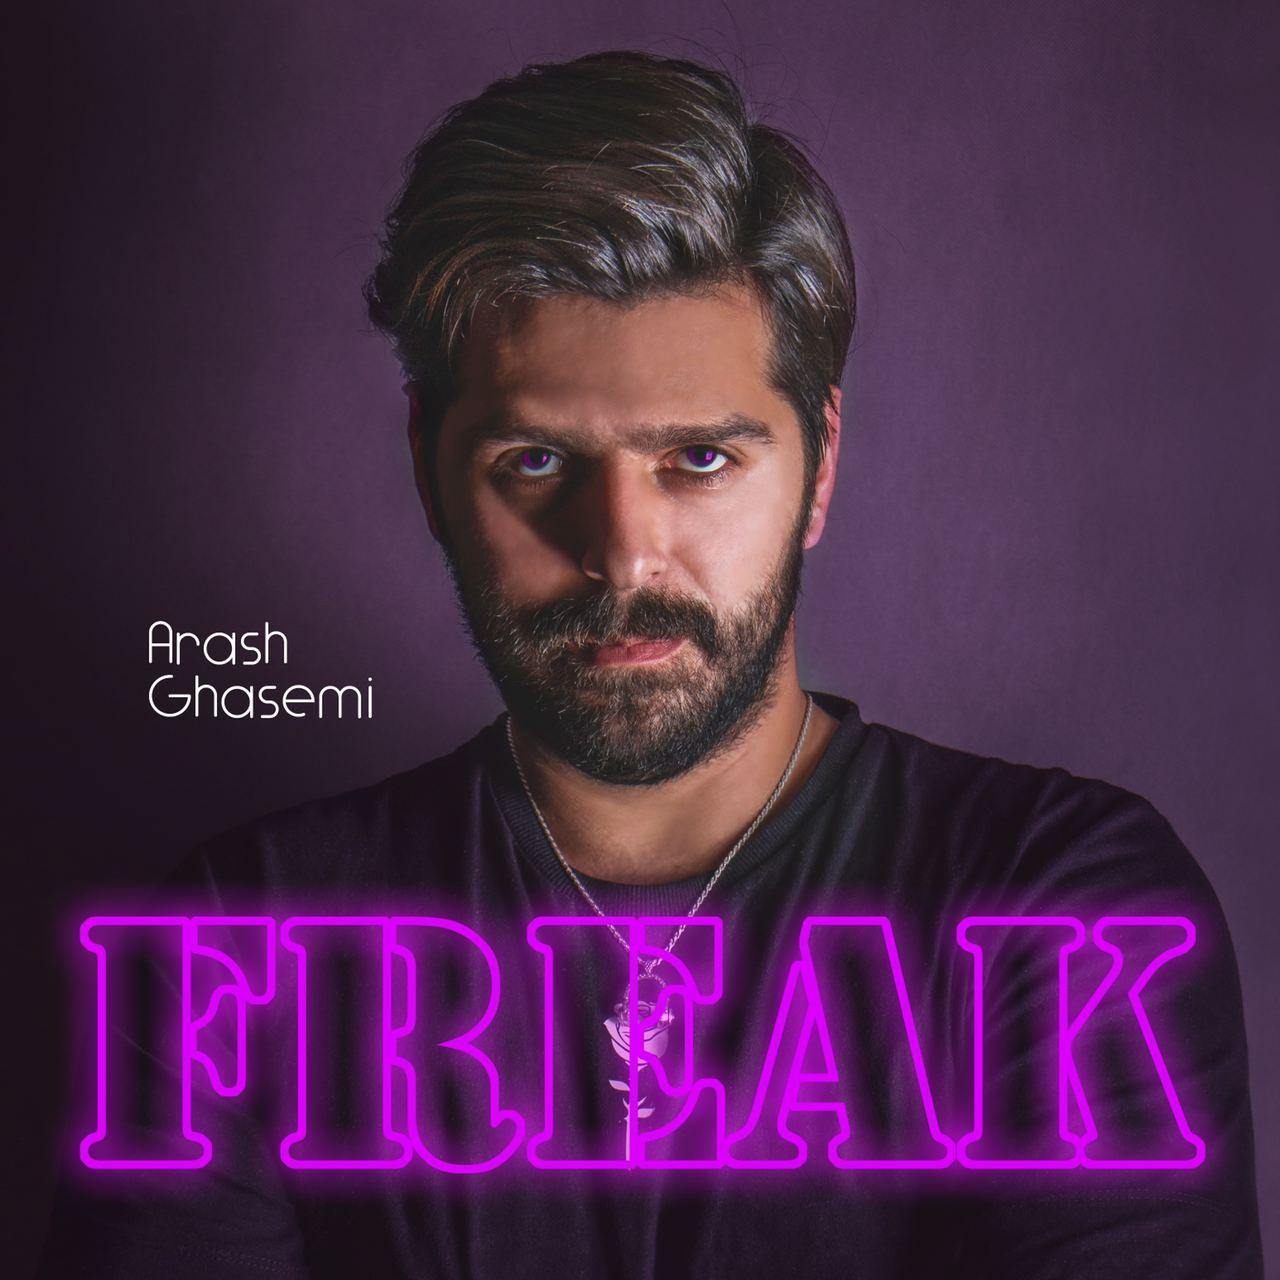  دانلود آهنگ جدید آرش قاسمی - Freak | Download New Music By Arash Ghasemi - Freak